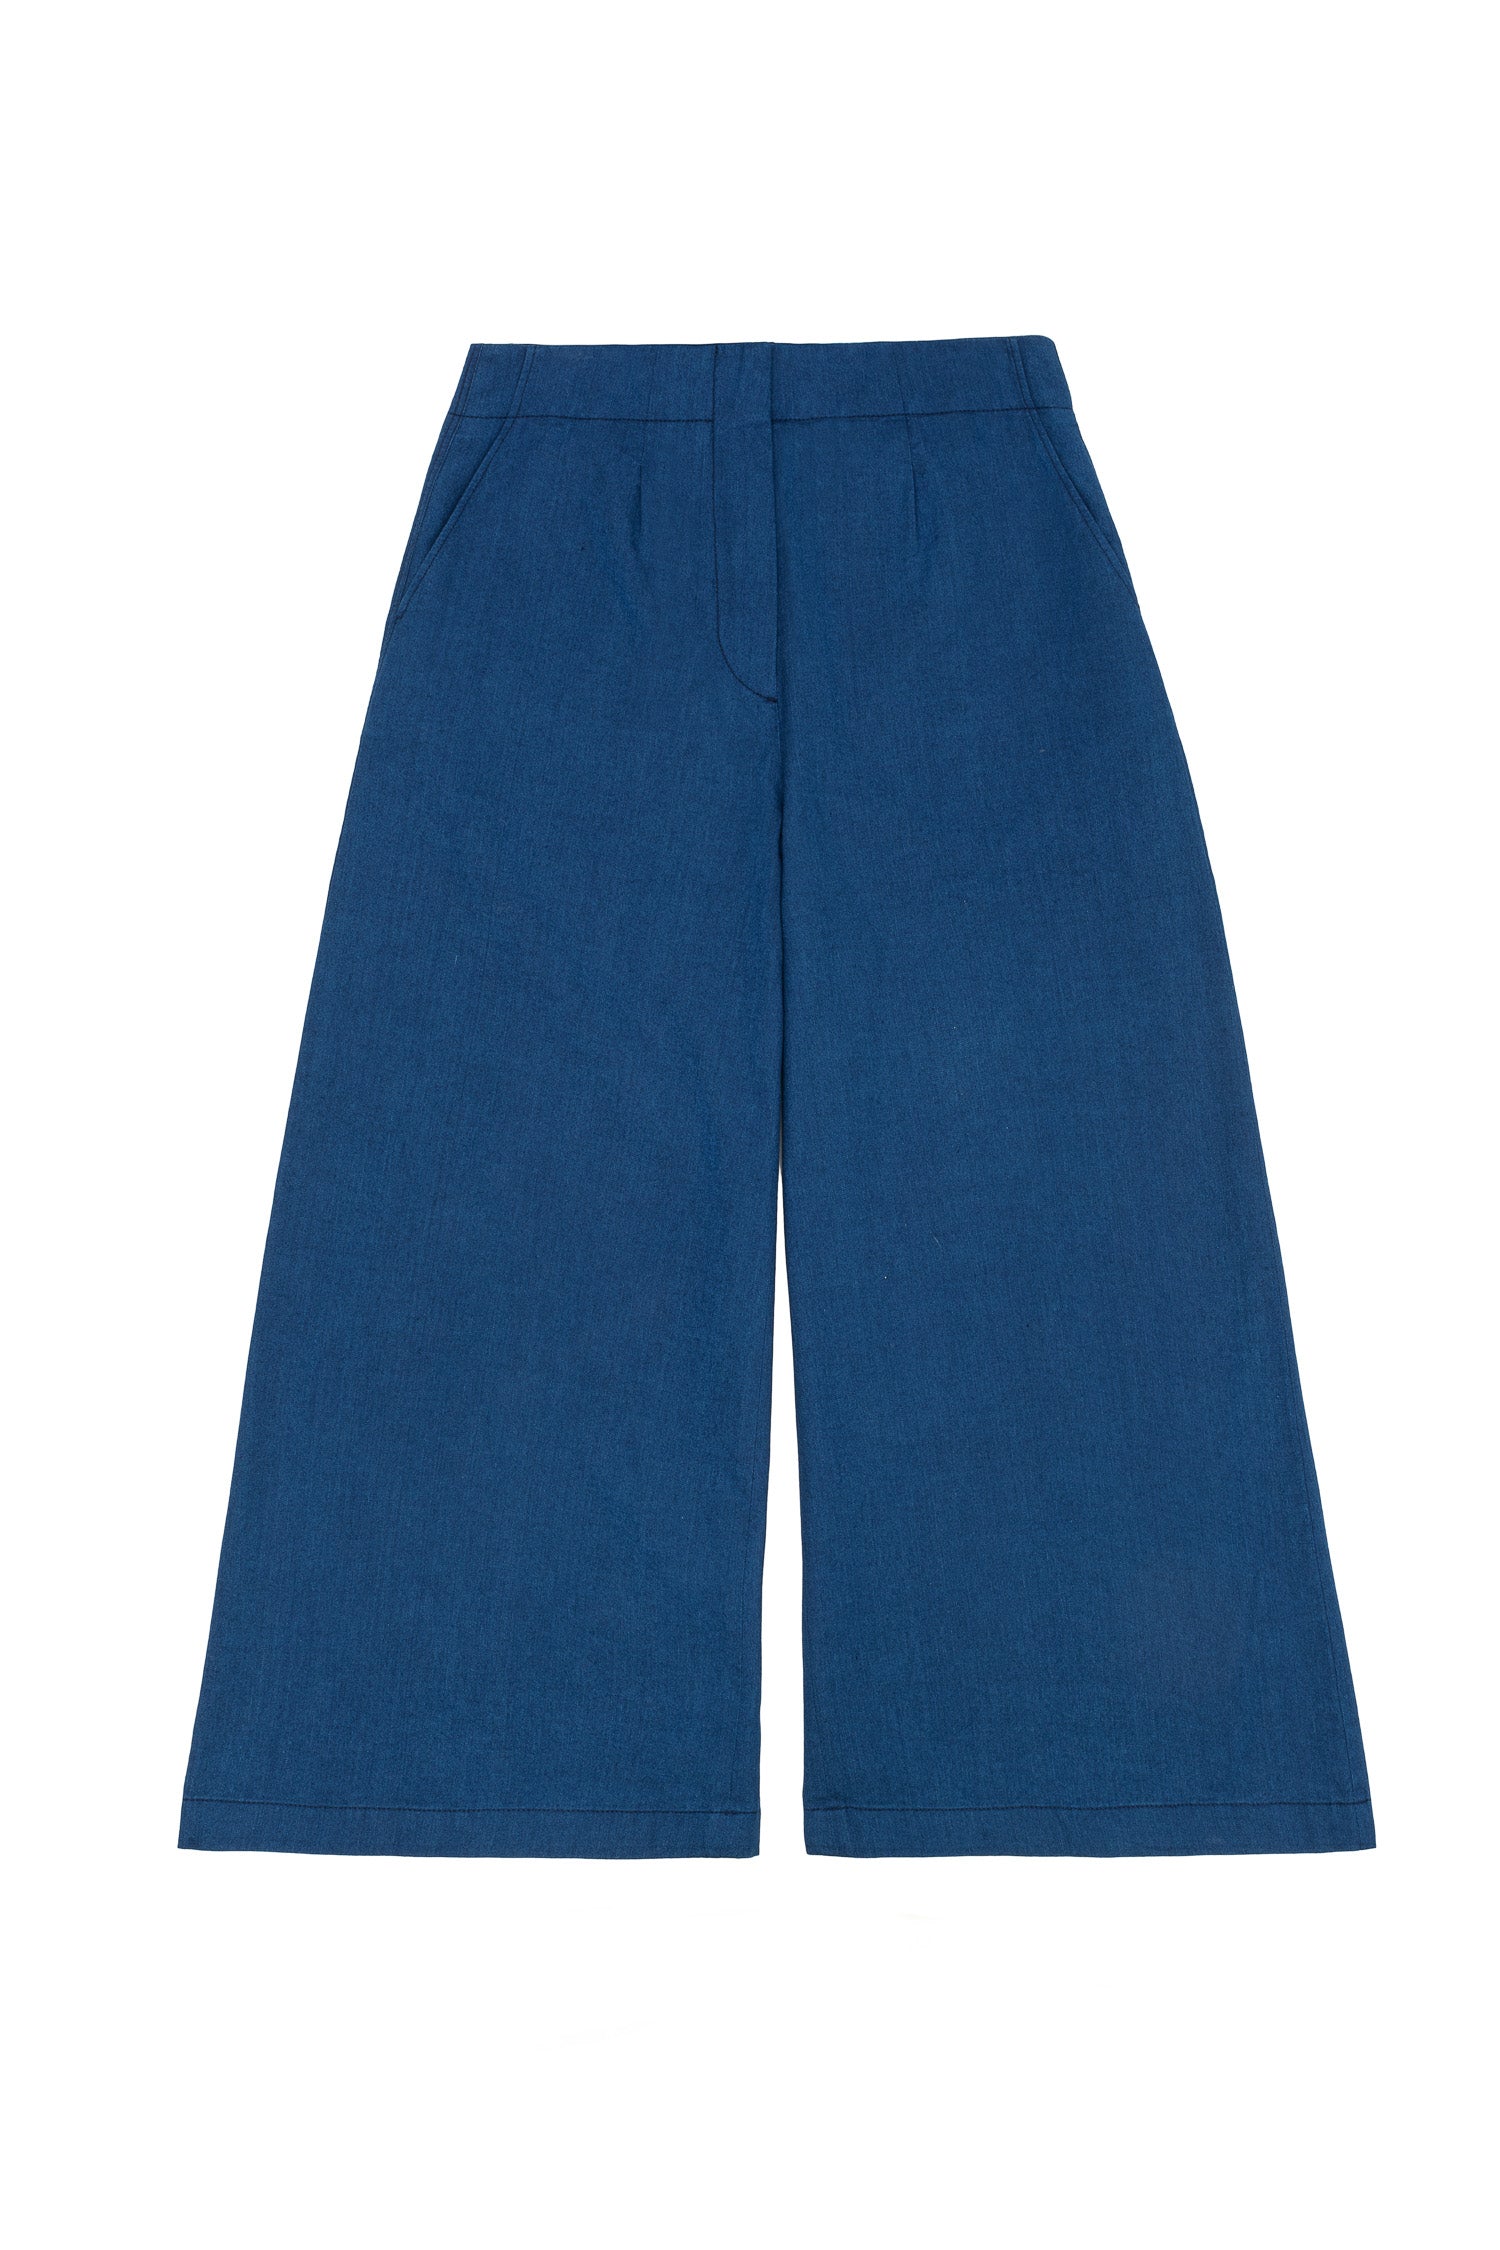 Womens wide leg culotte trouser in Japanese Denim. Amelia Wide Leg Trouser by Saywood. Natural indigo, cotton.